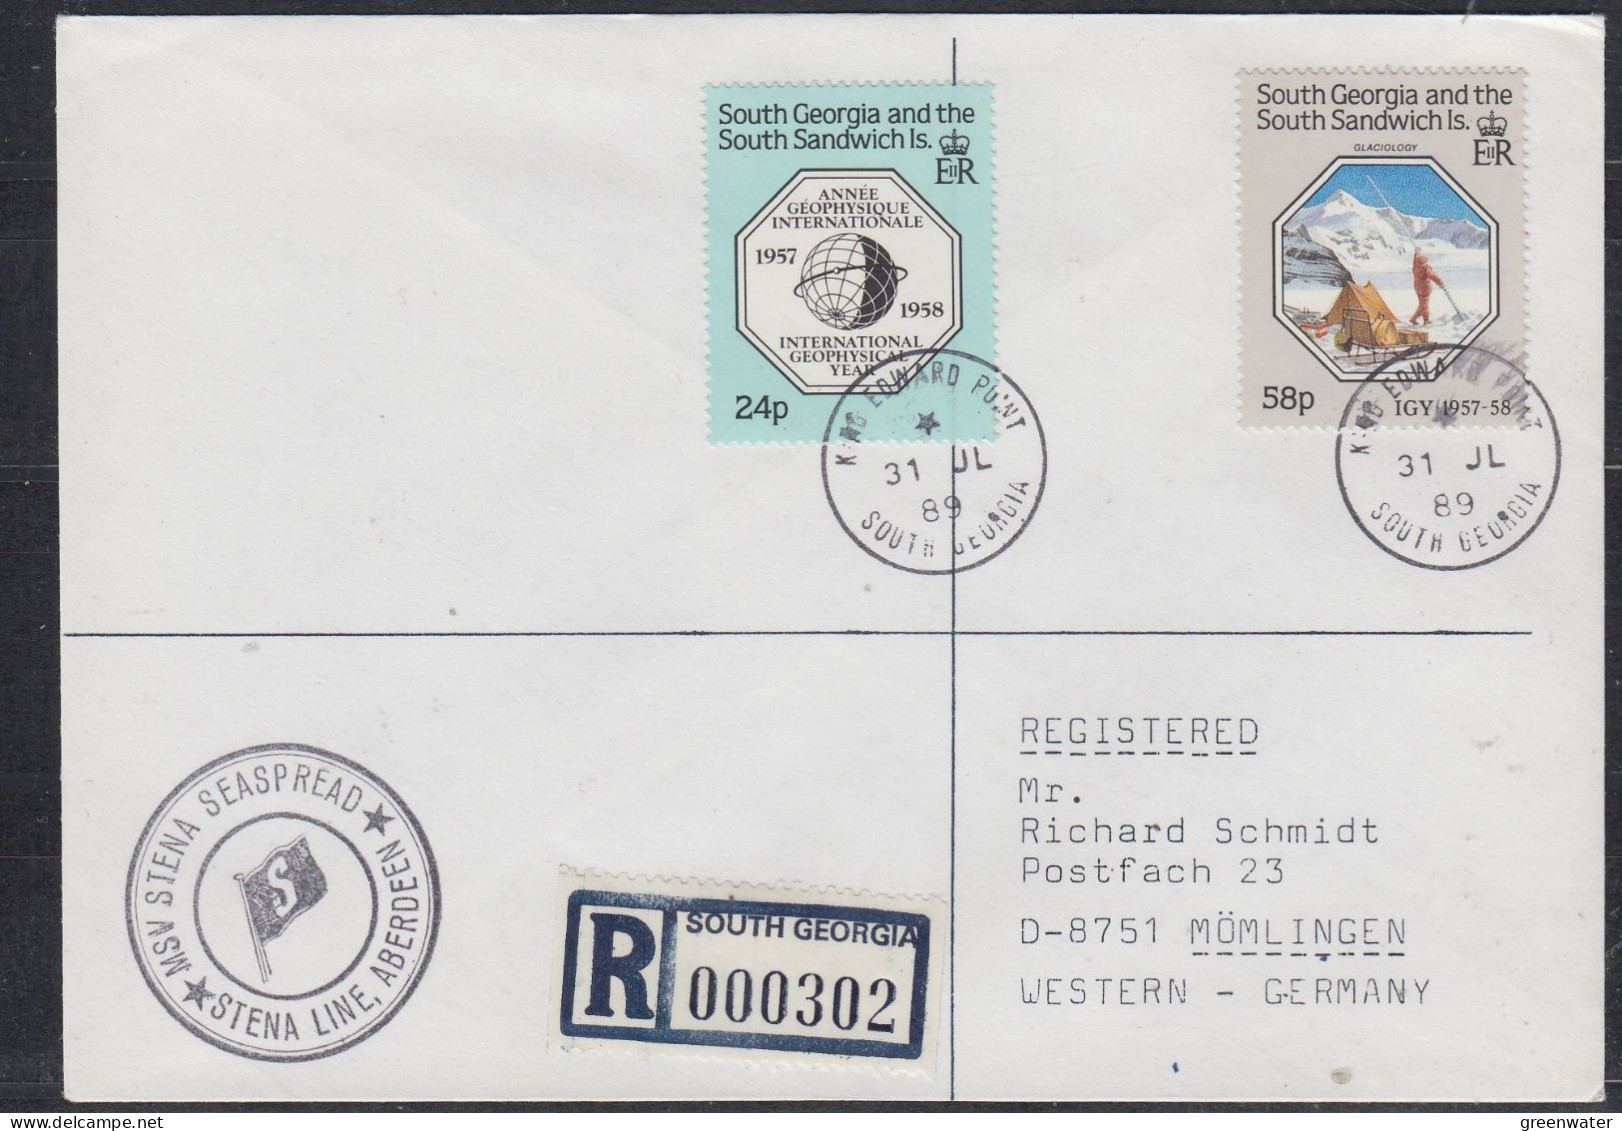 South Georgia & South Sandwich Islands 1989 MSV Stena Seaspread Registered Cover  Ca 31 JL 1989 (FG179) - South Georgia